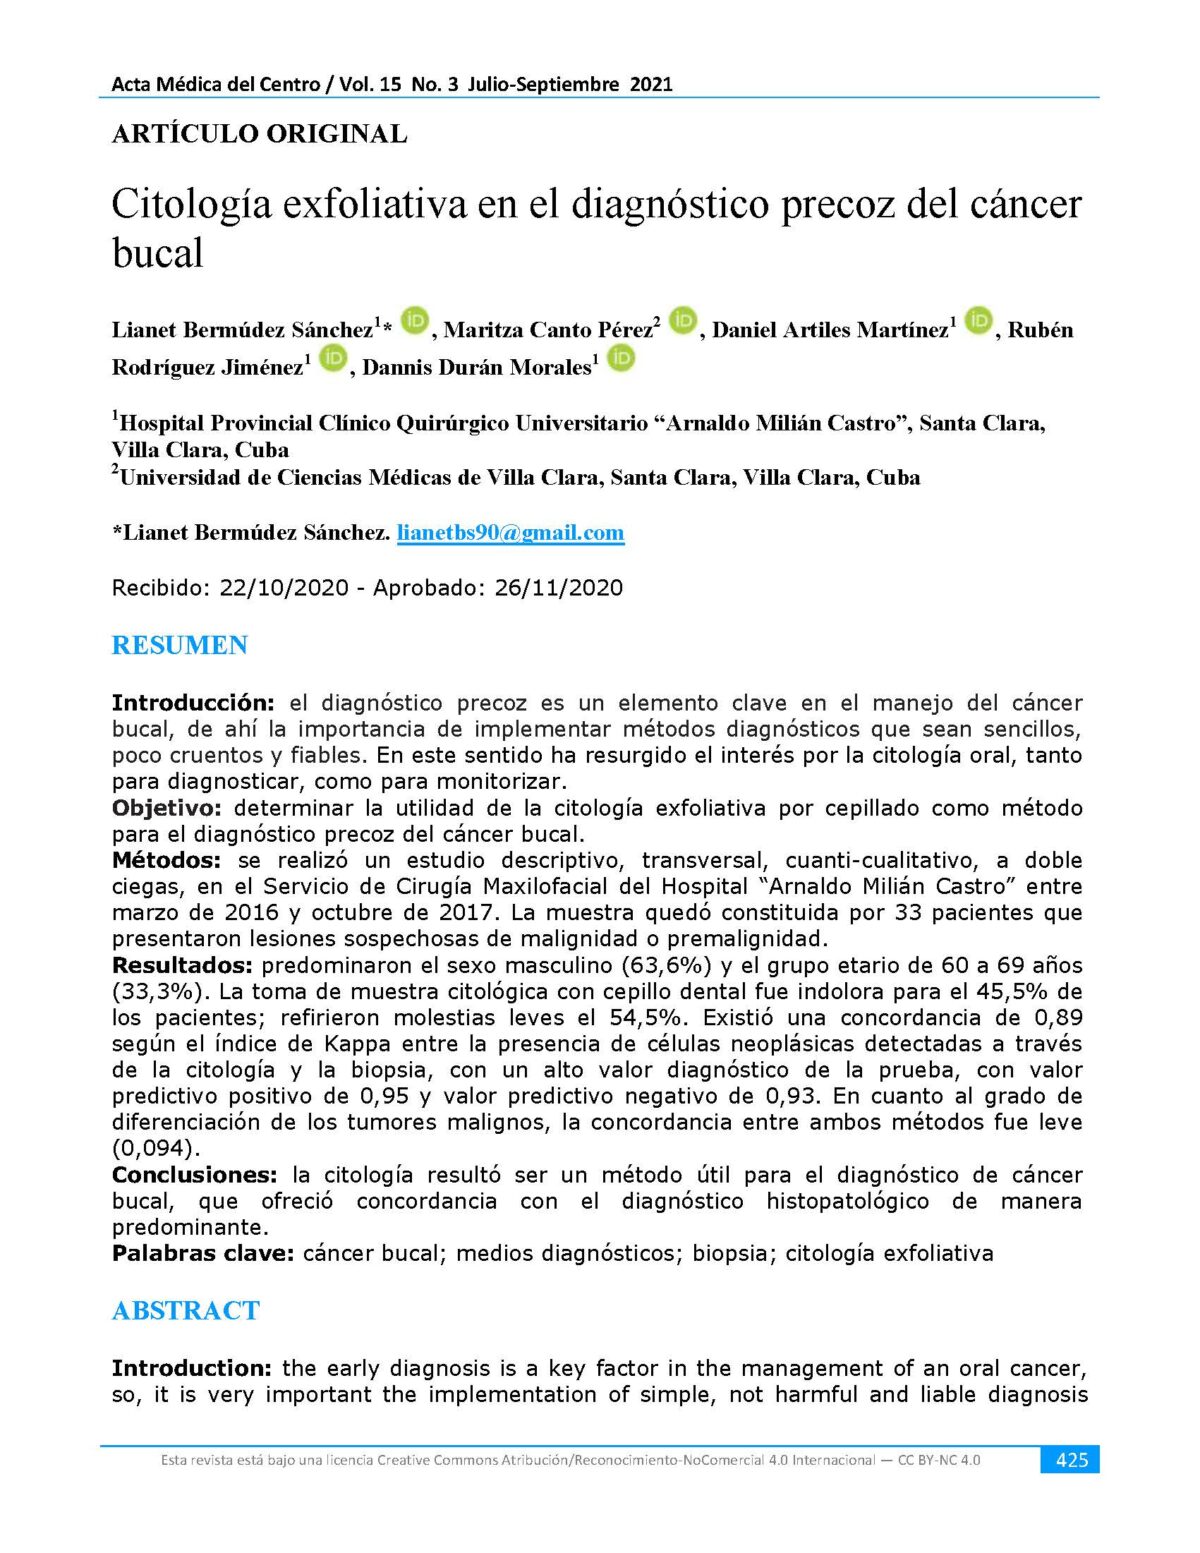 Citologia-Exfoliativa-en-el-Diagnostico-Precoz-del-Cancer-Bucal-1200x1553.jpg